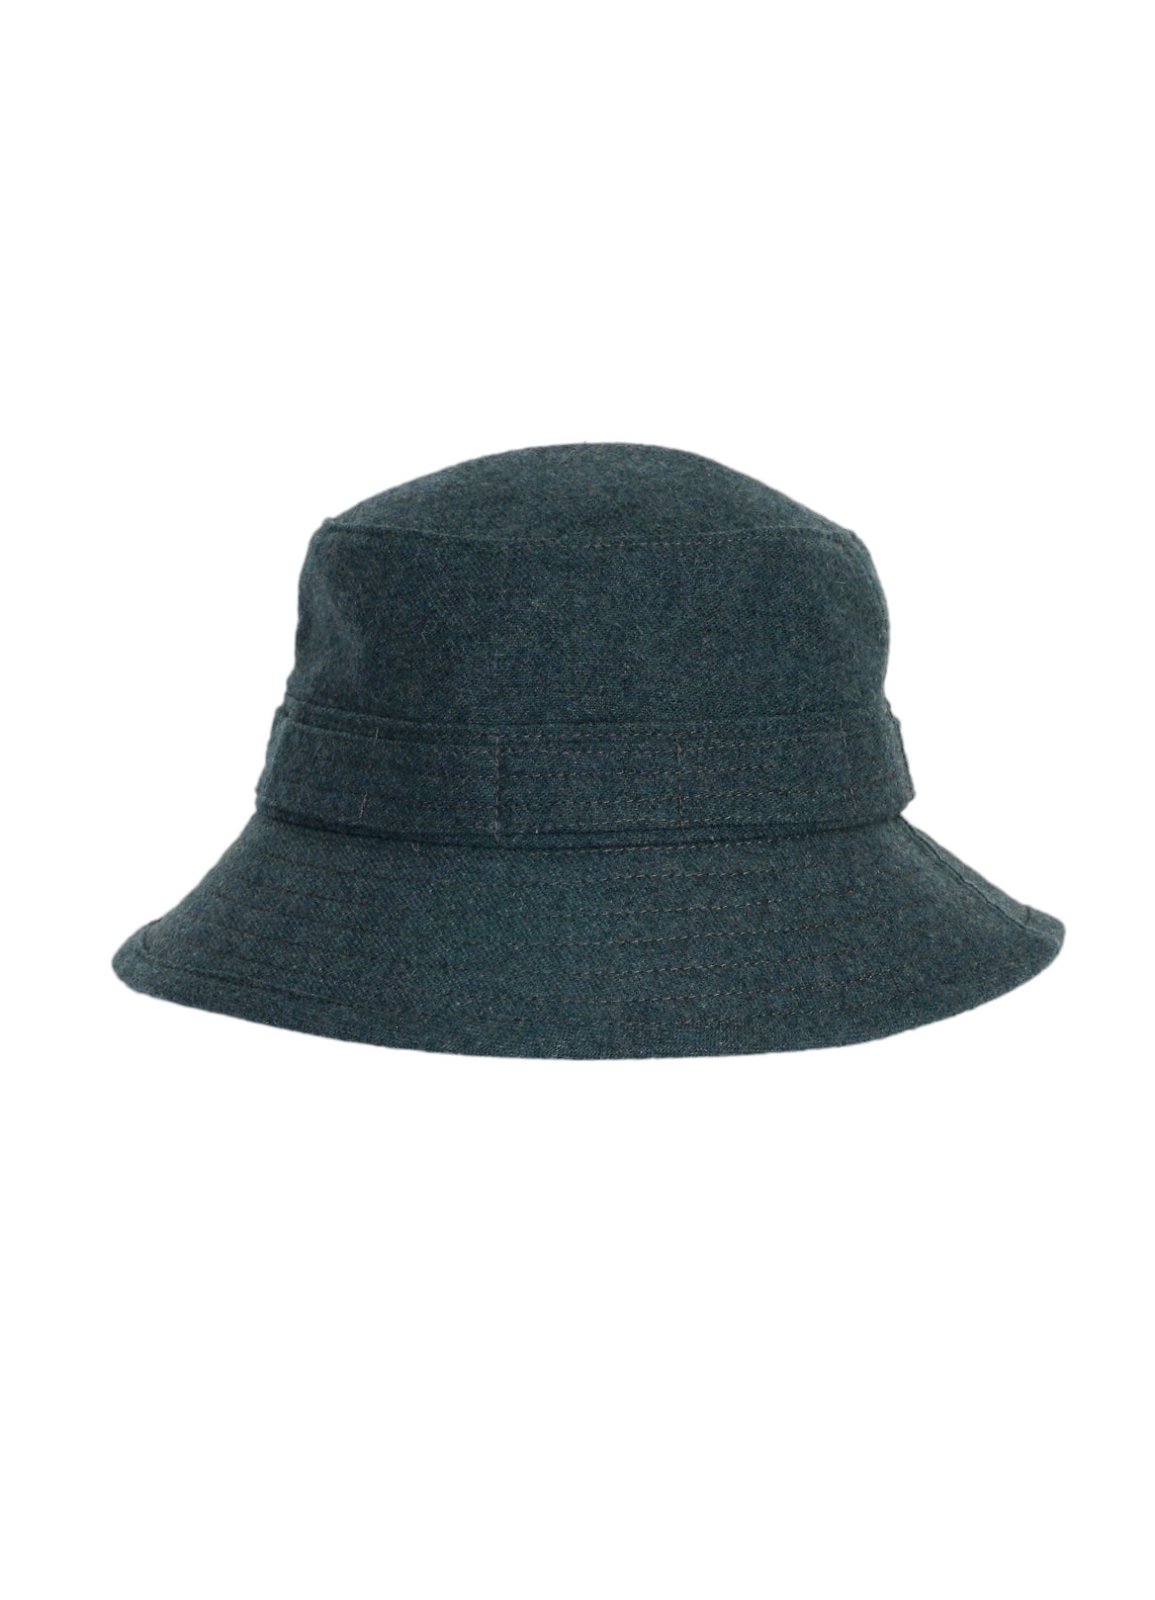 HANSEN GARMENTS - EDVARD | Bucket Hat With Earflaps | Moss Green - HANSEN Garments